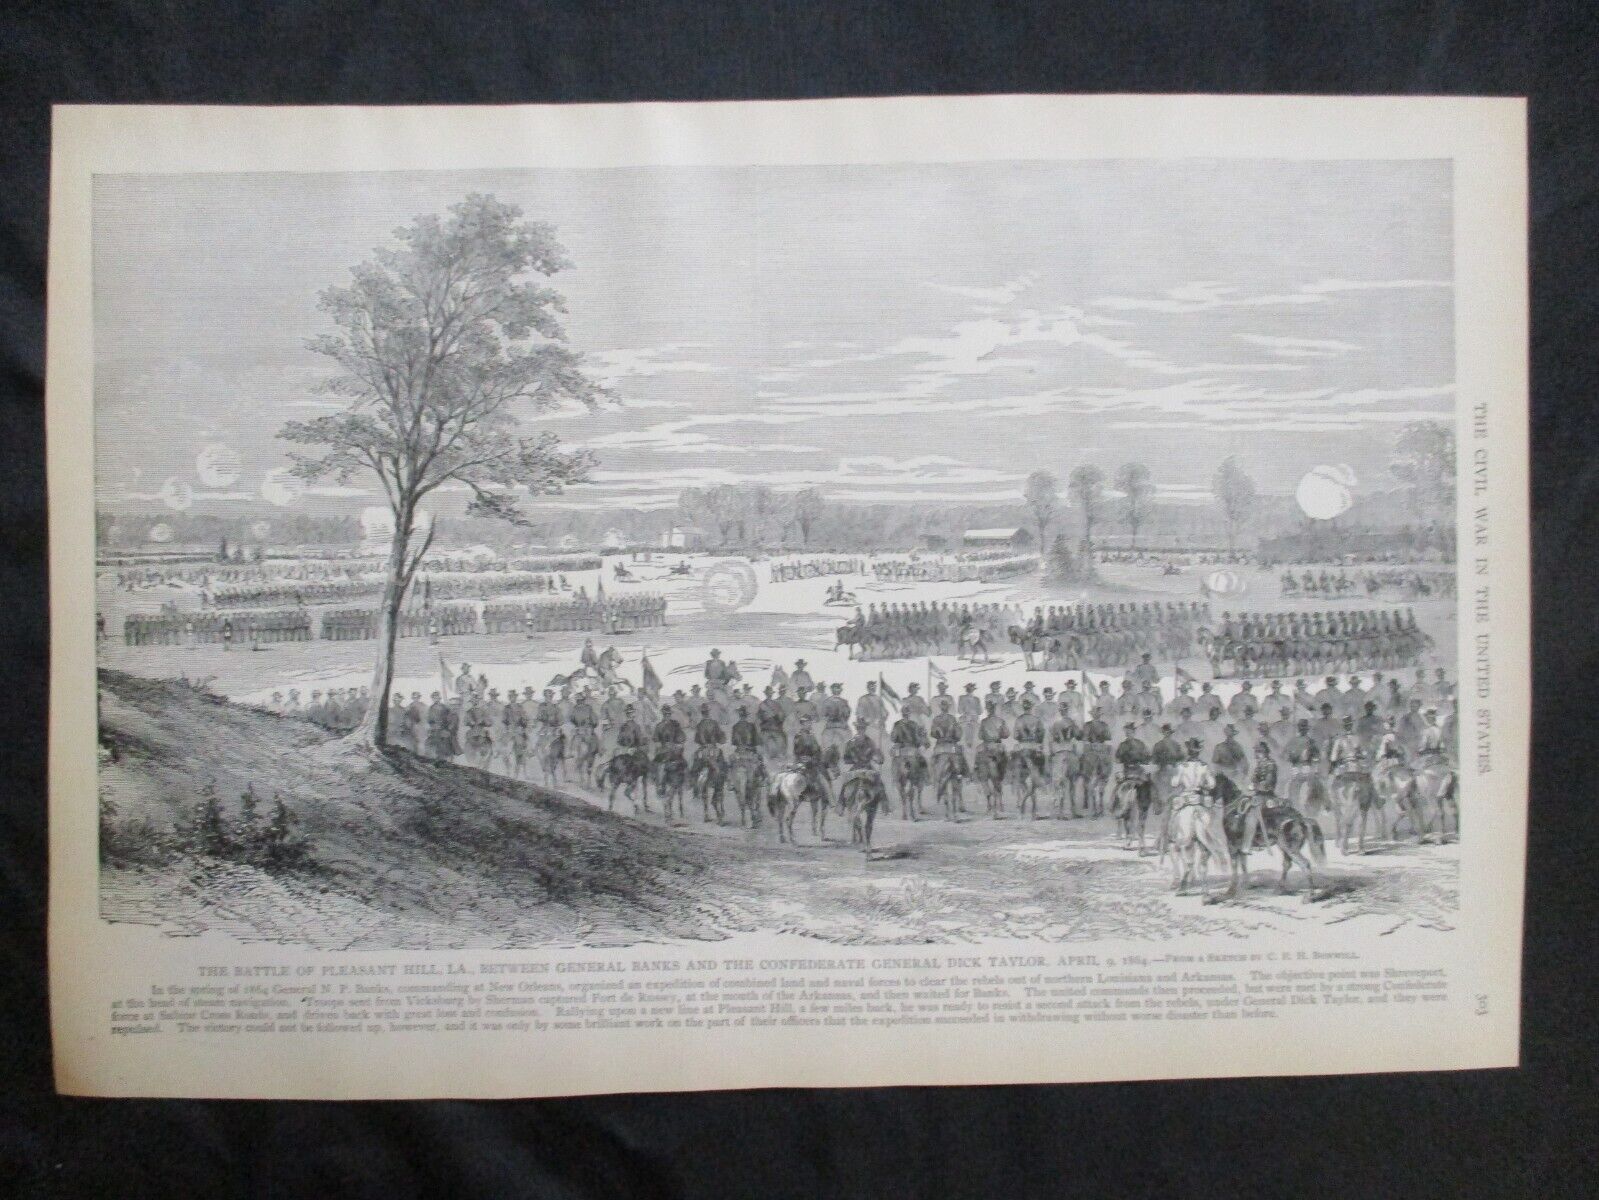 1884 Civil War Print - Battle of Pleasant Hill, Louisiana, April 9, 1864